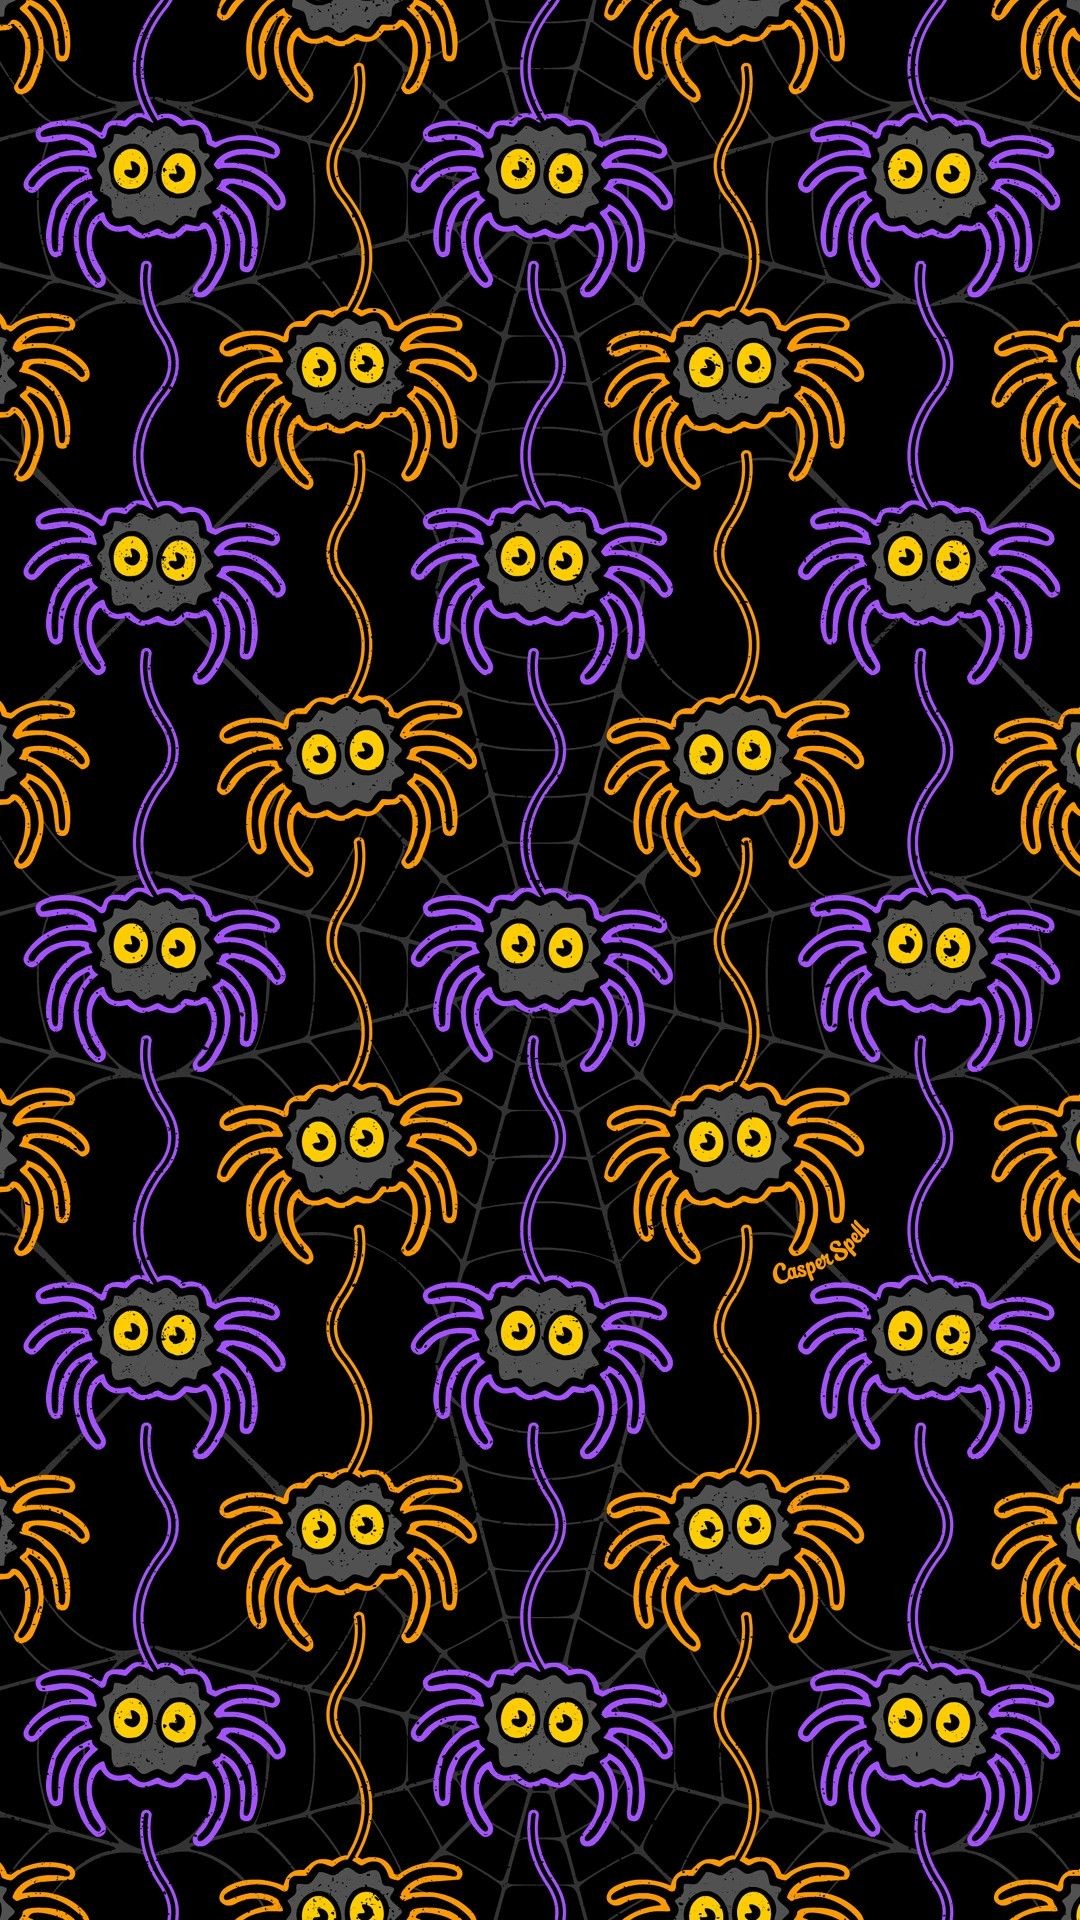 1080x1920 Spooky Cute Creepy Halloween Spiders Wallpaper Seamless Repeat Pattern Art  Illustration Casper Spell (www.casperspell.com)